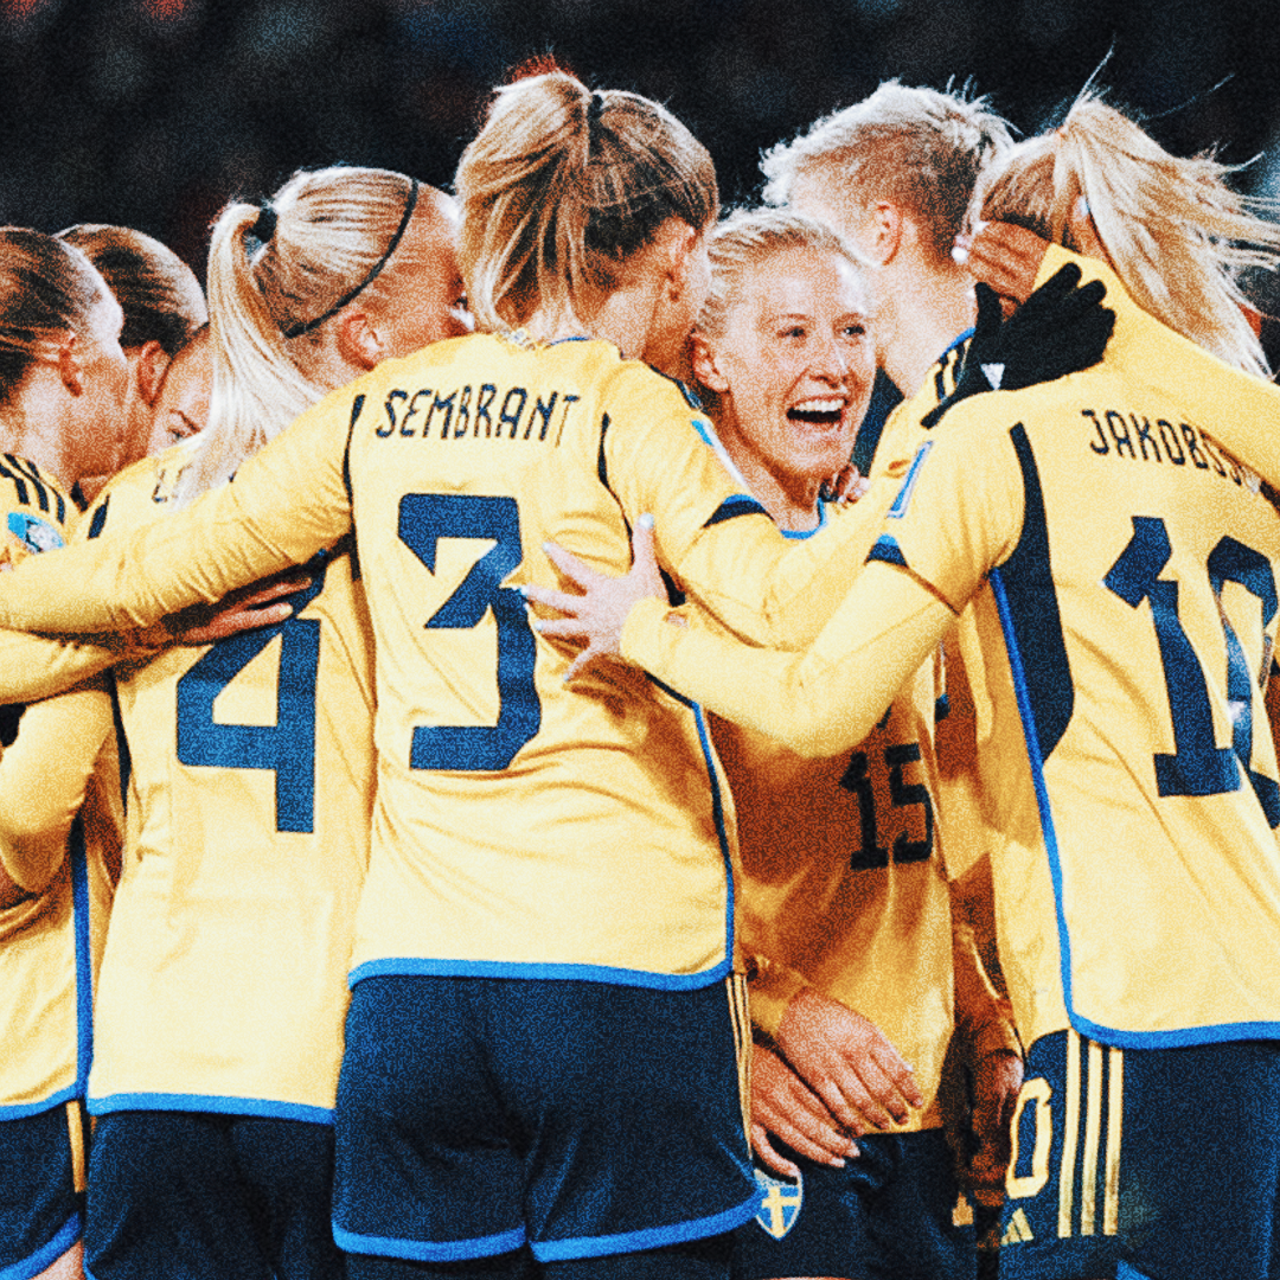 Swedish soccer traditions' uniforms